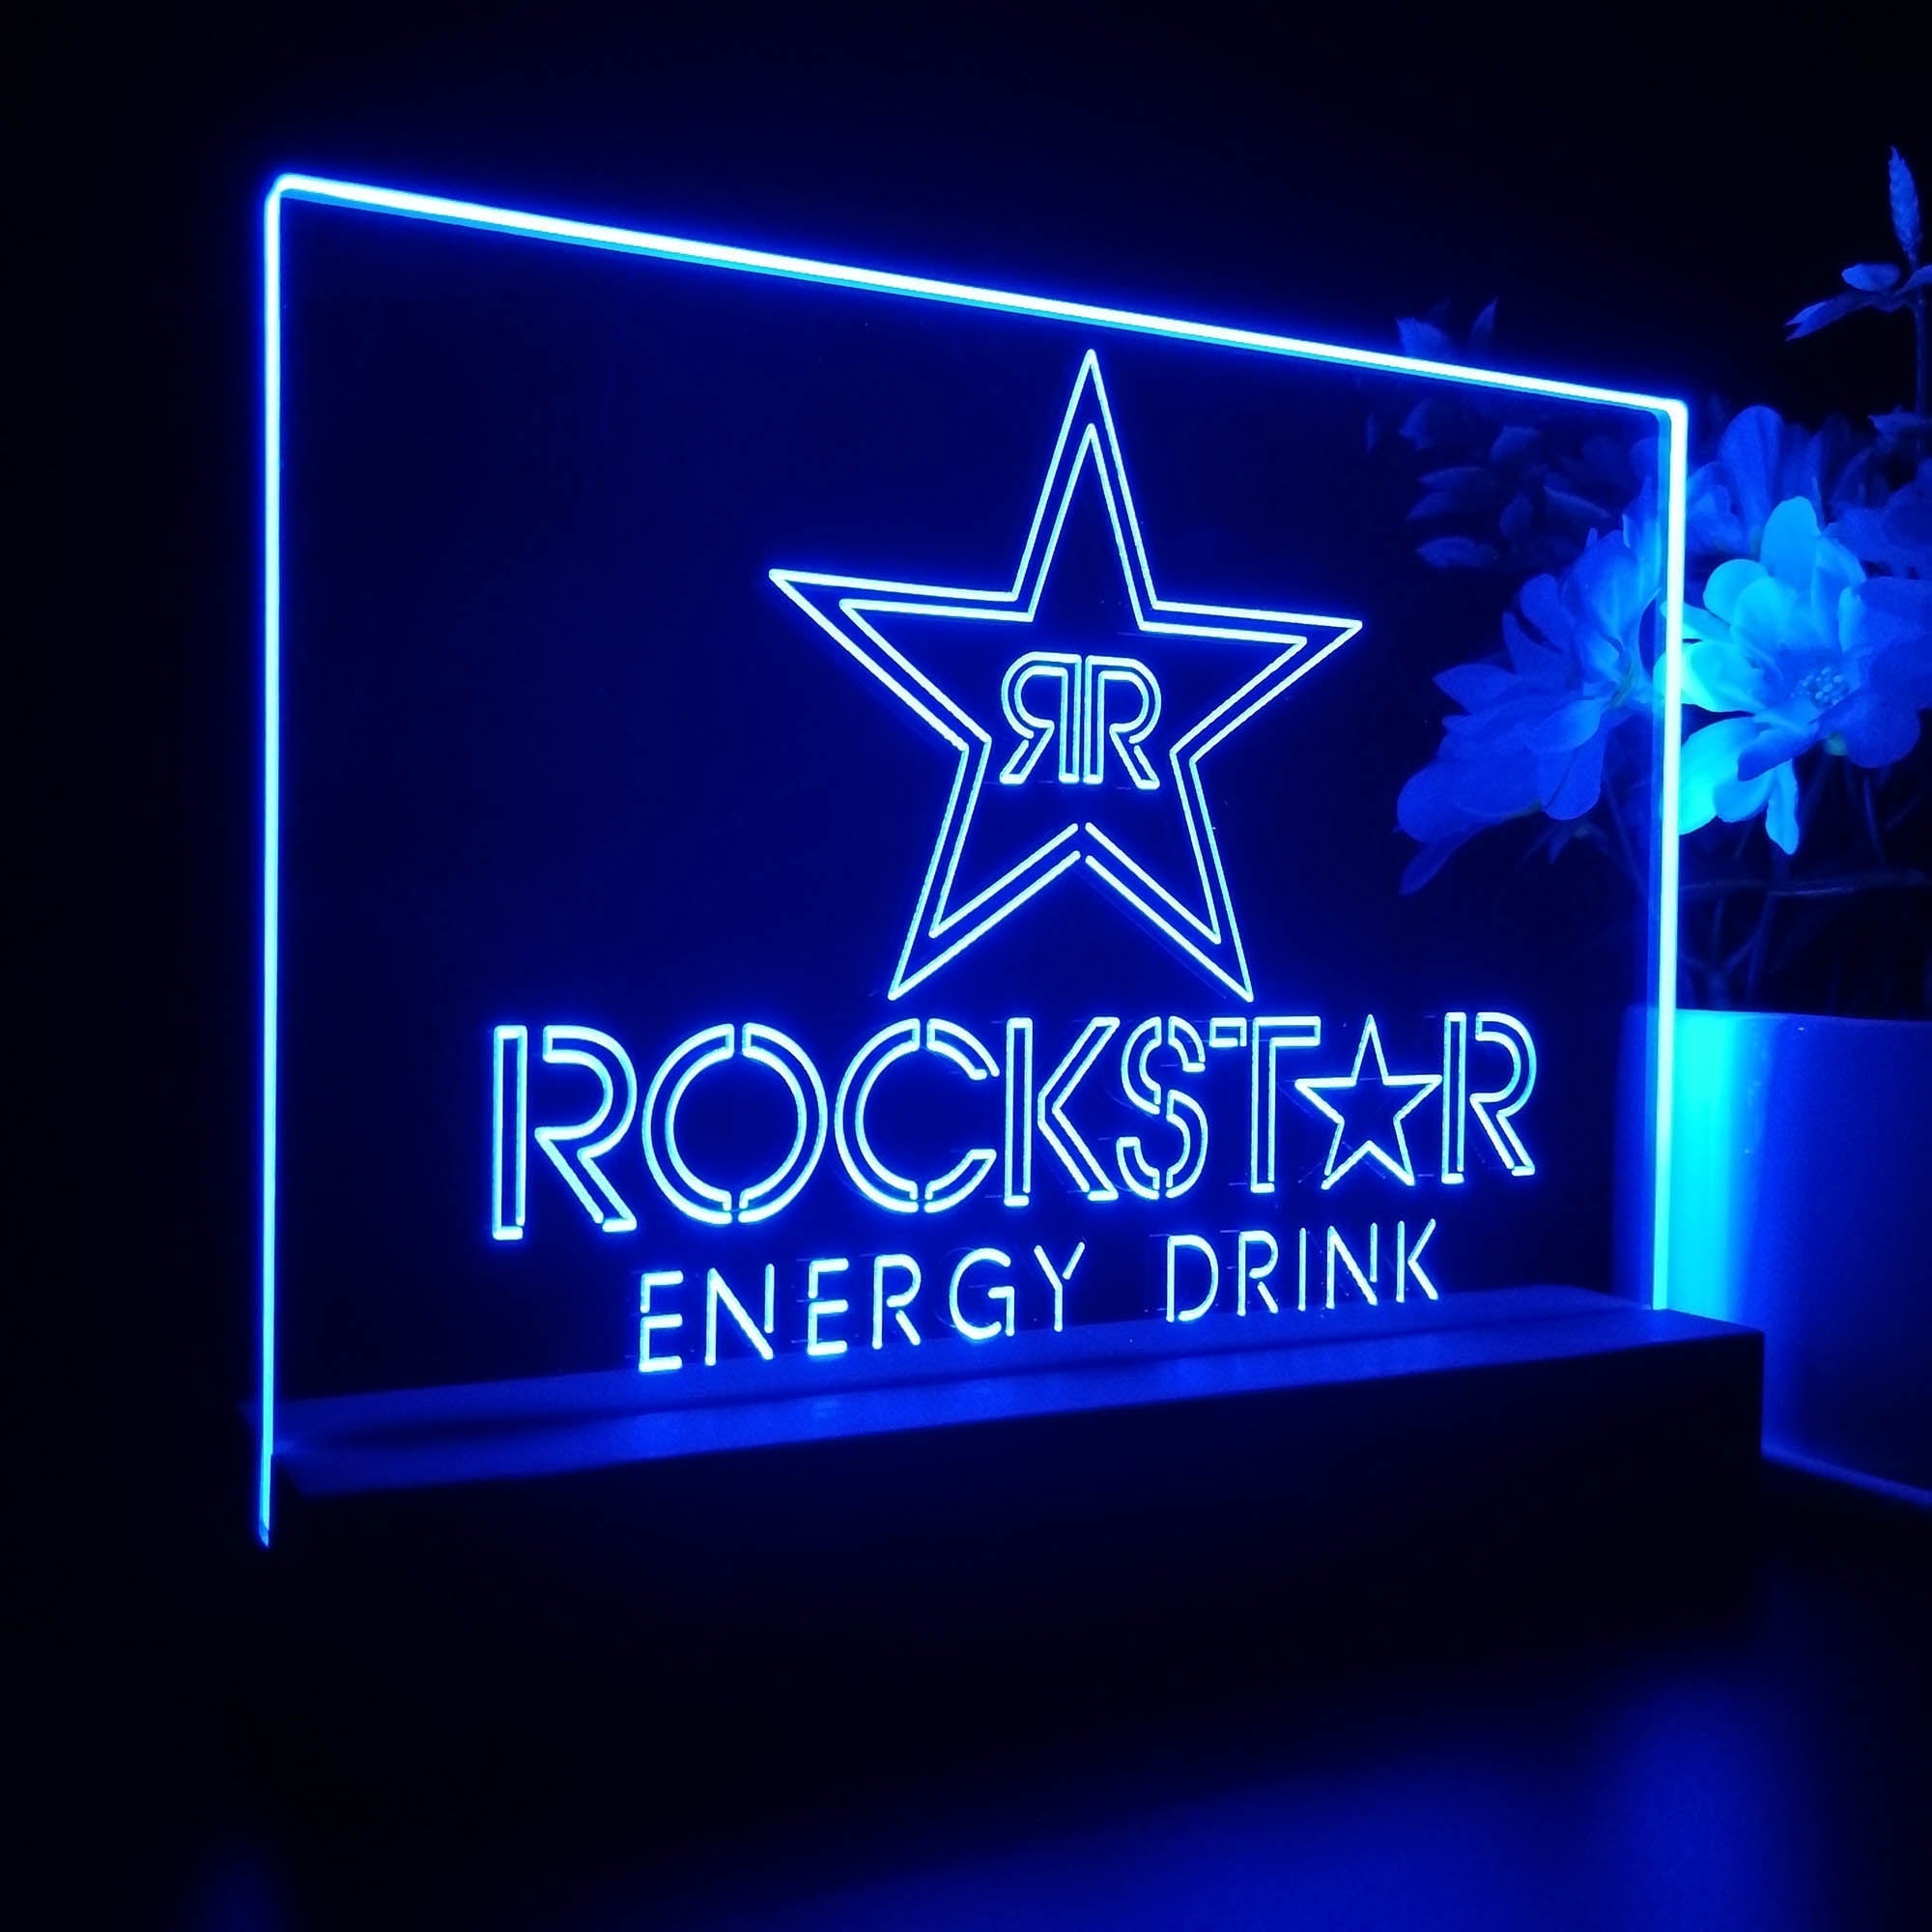 Rockstar Energy Drink Double Star Neon Sign Pub Bar Decor Lamp